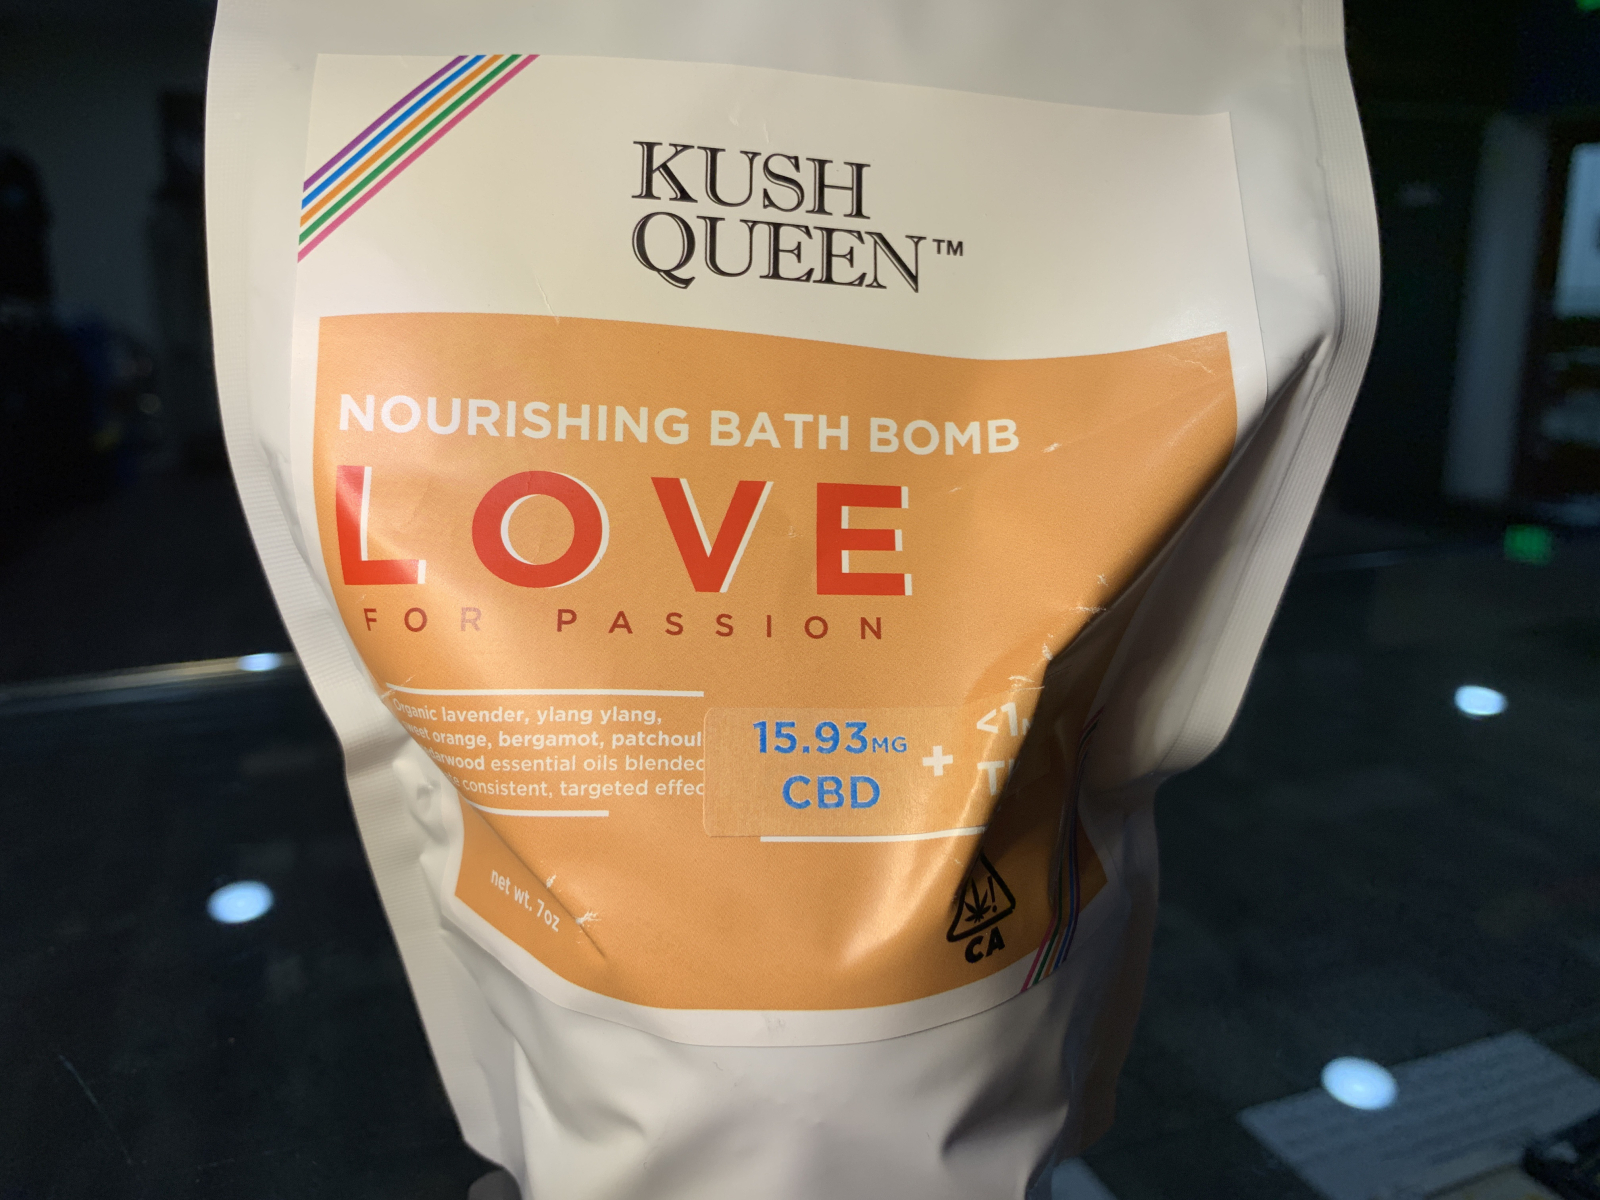 Queen Kush CBD Love bath bomb